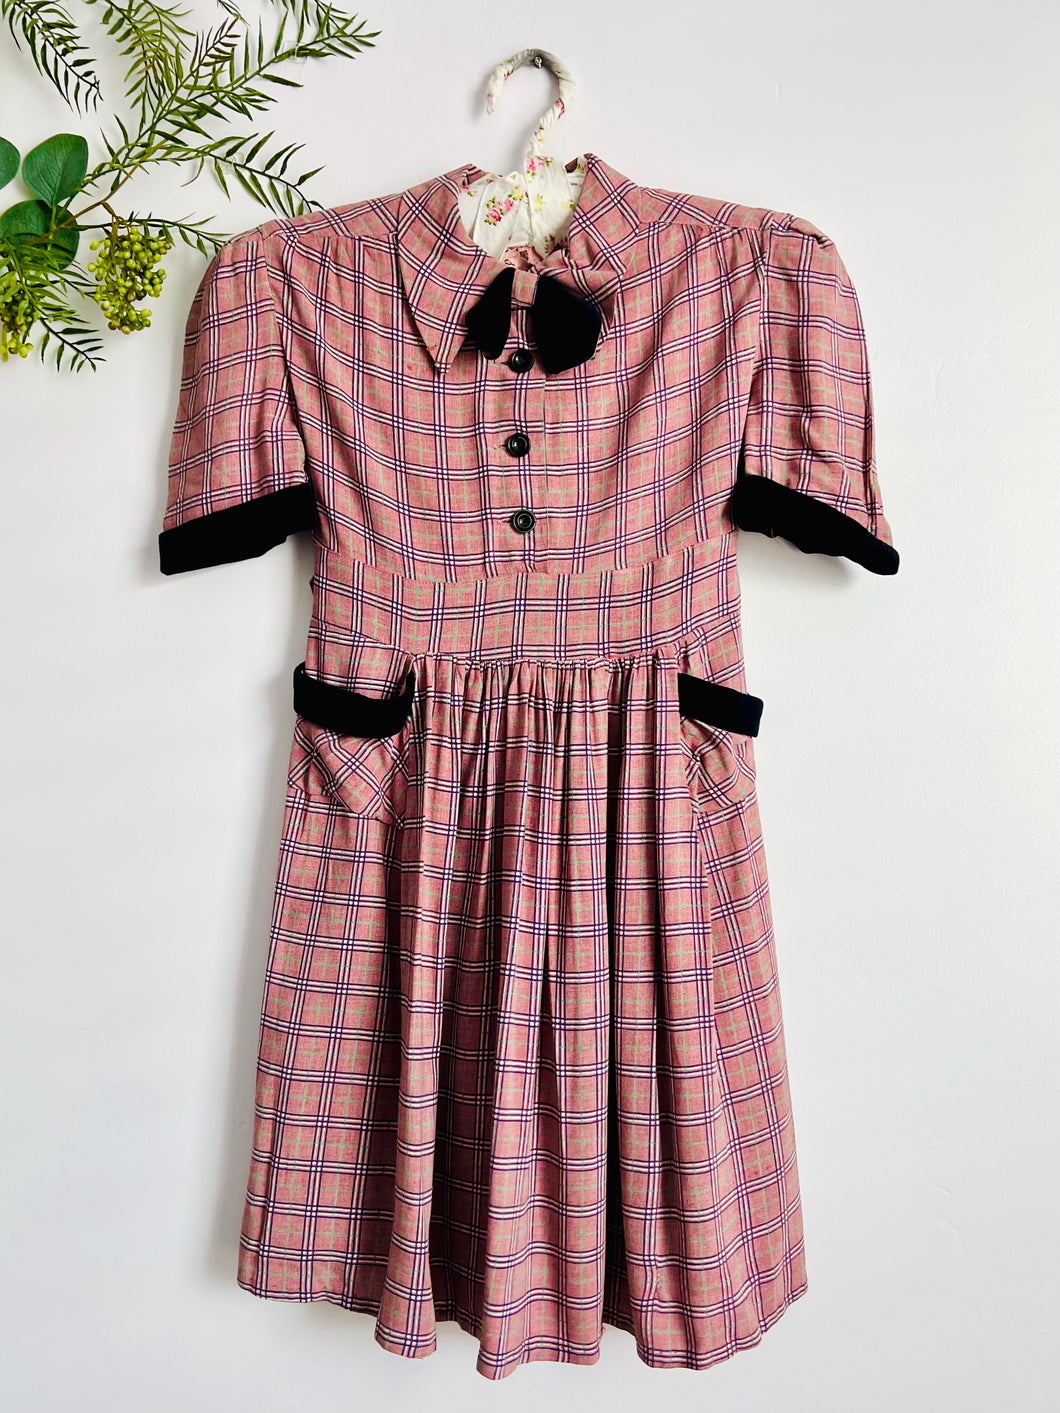 Vintage 1930s baby girl dress